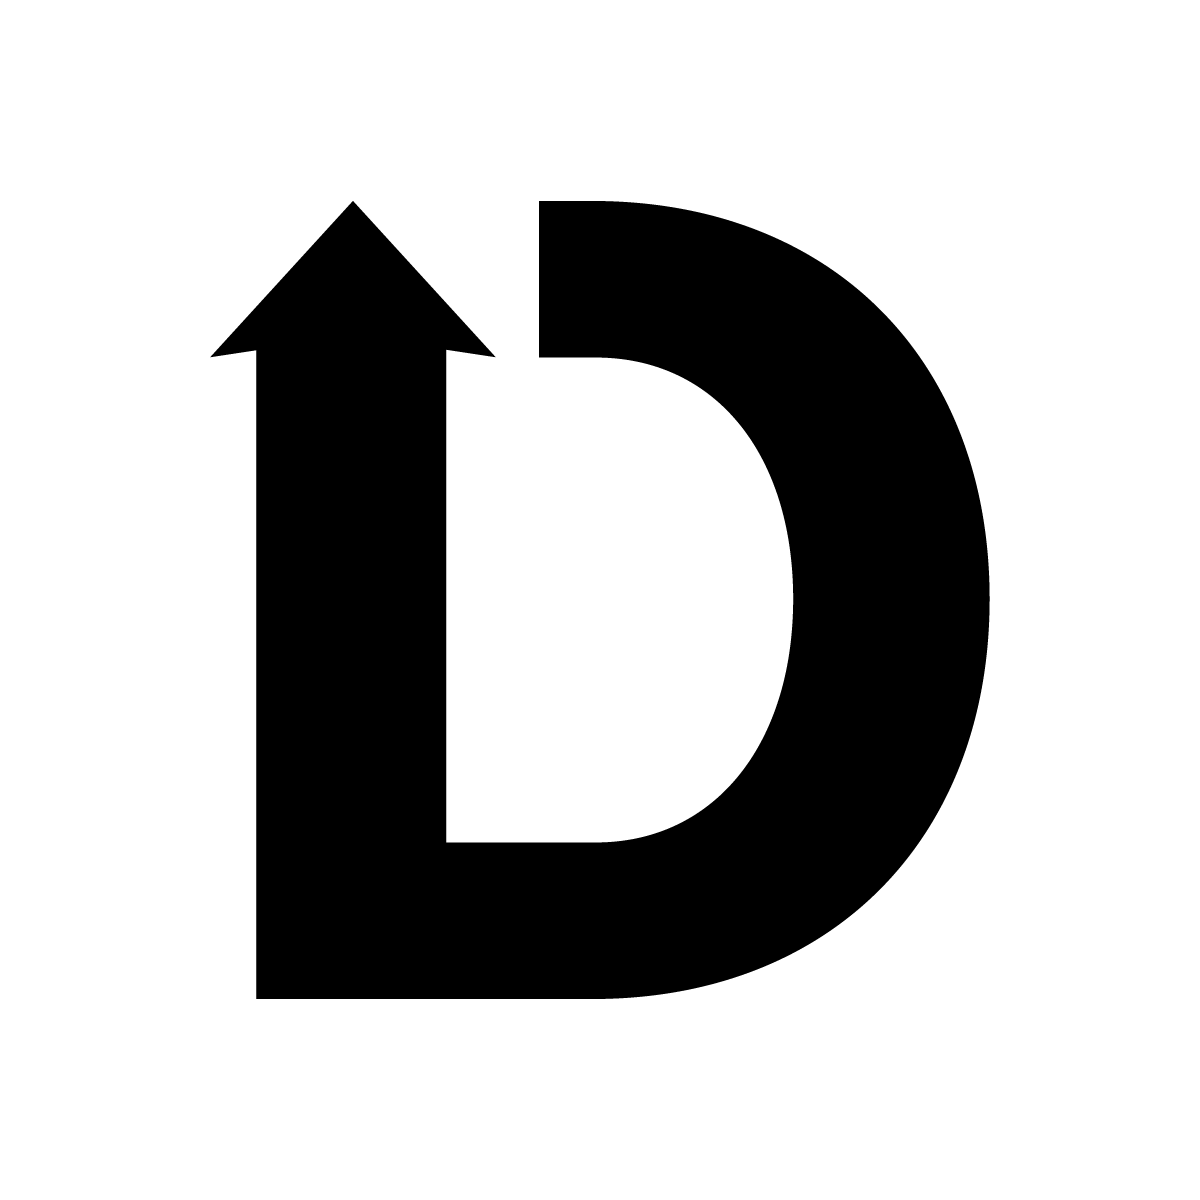 Direction, Inc. logo